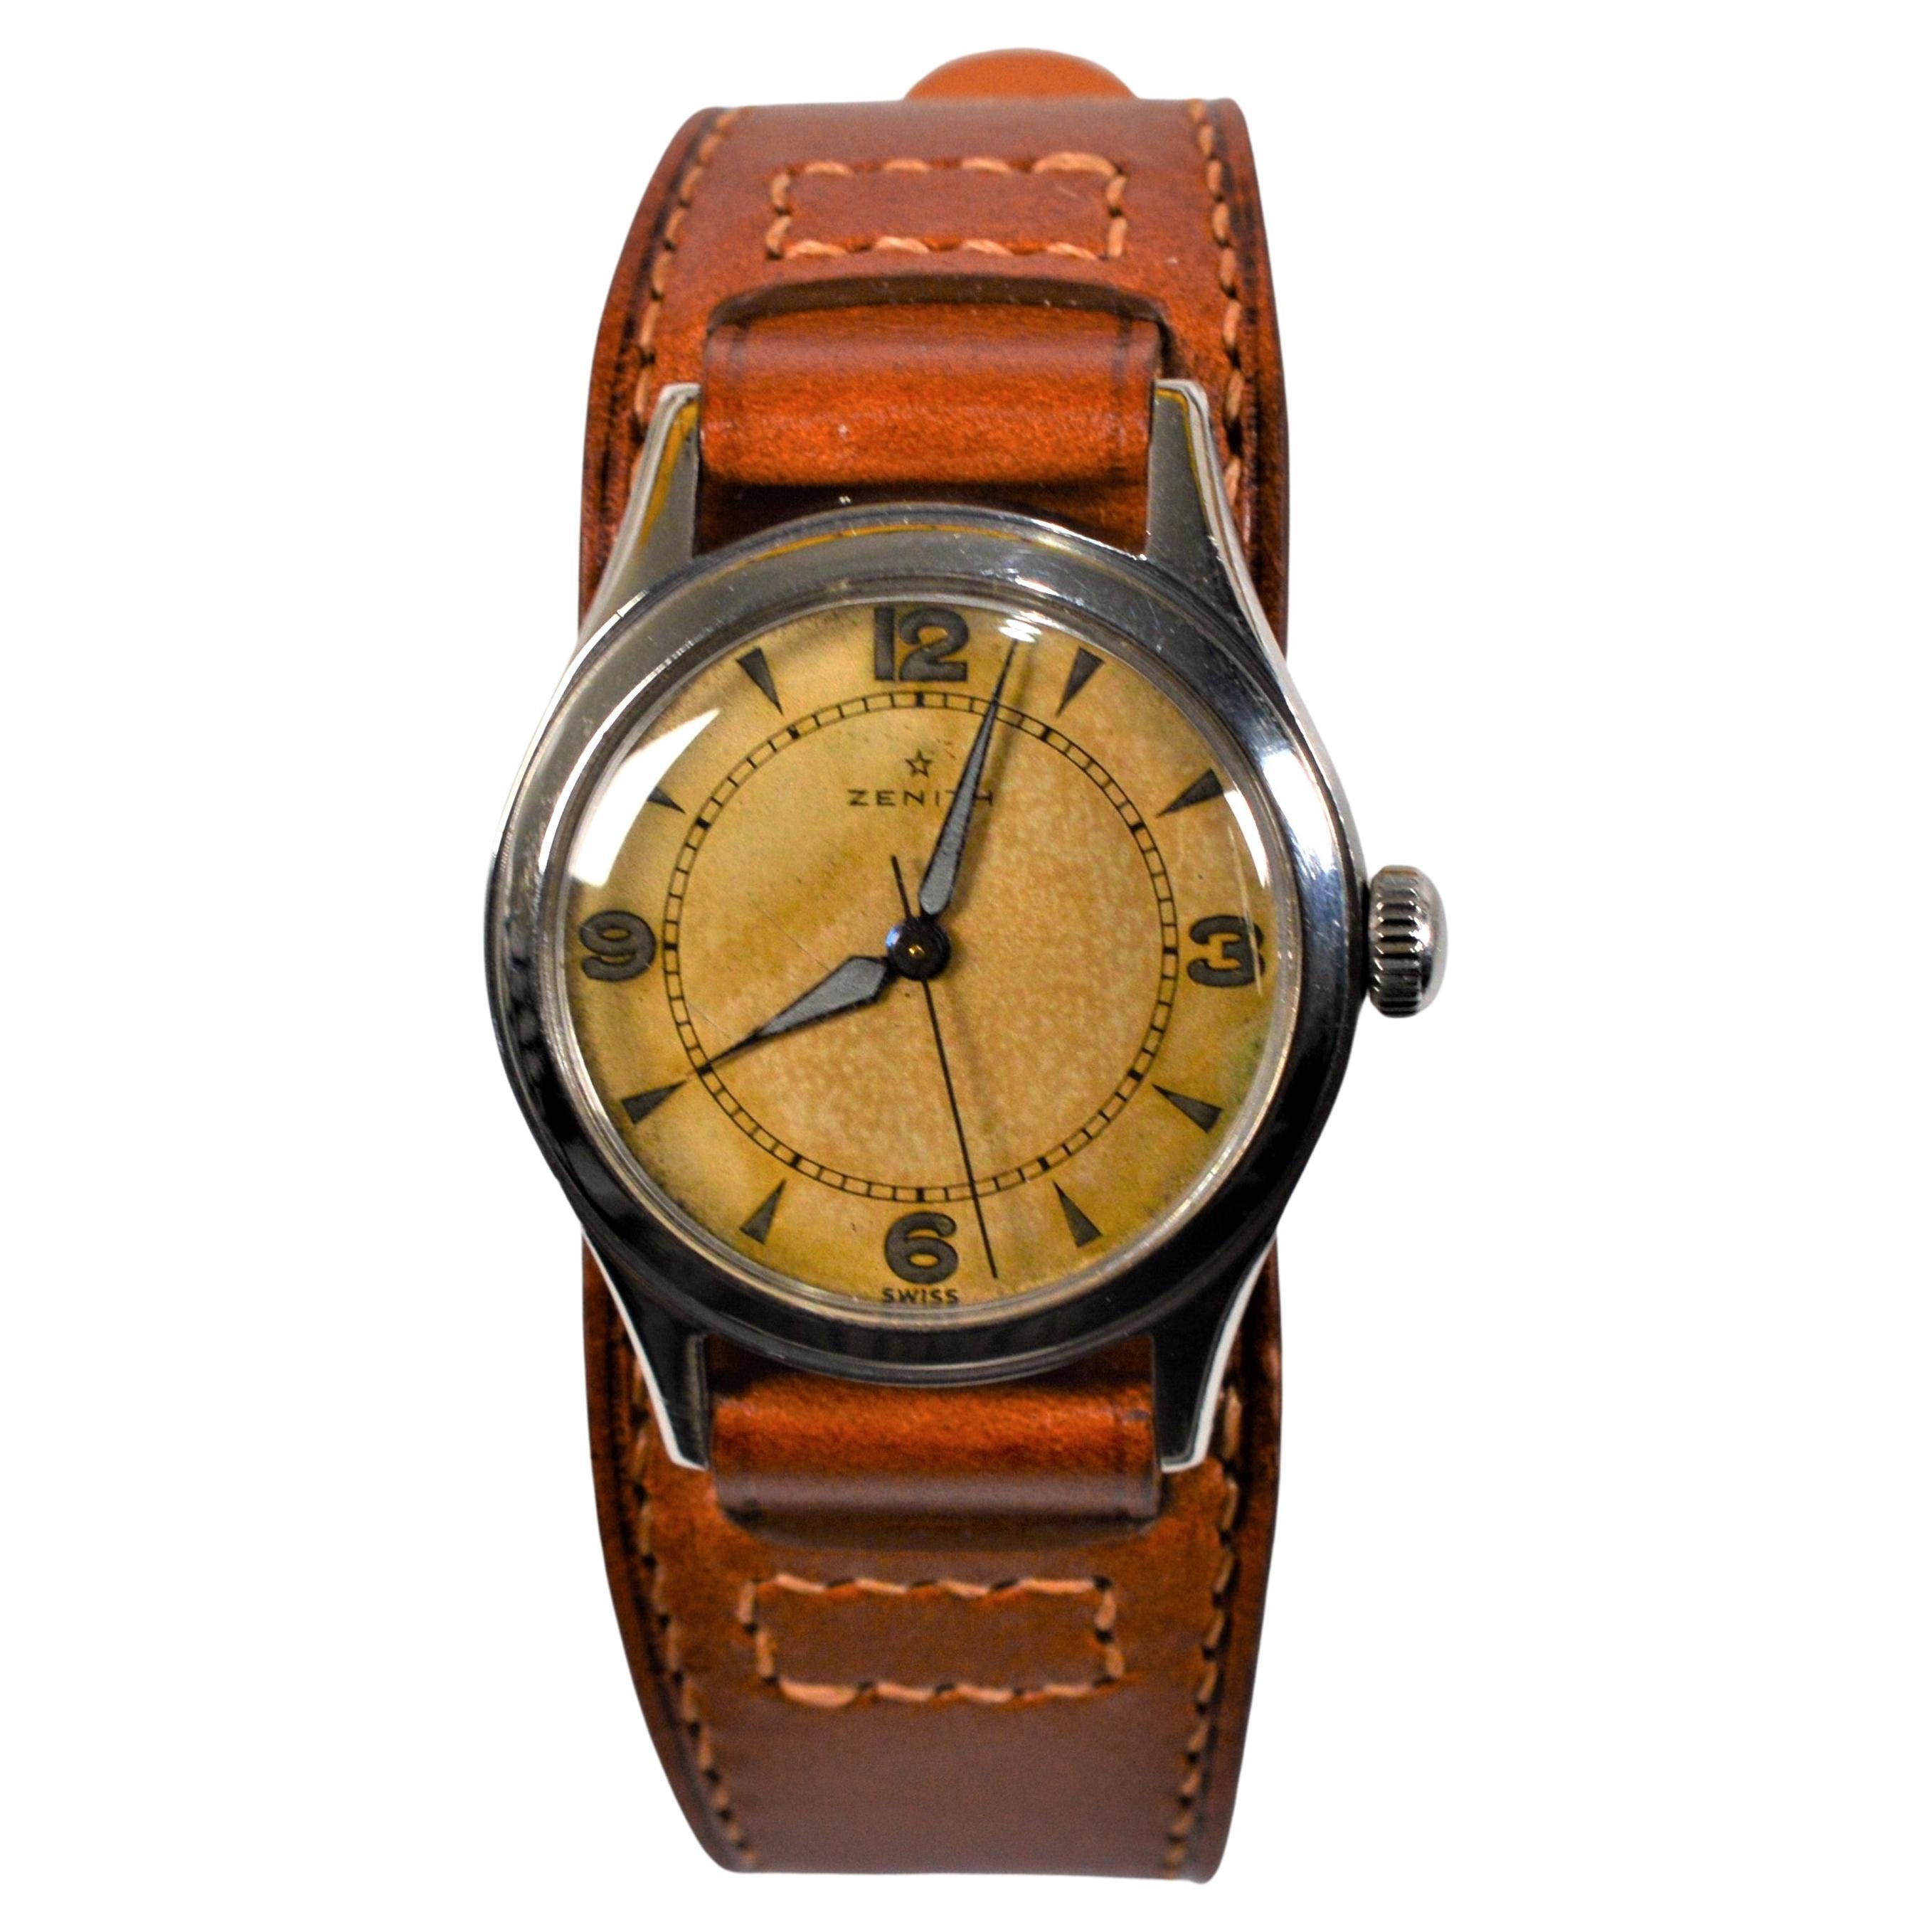 Vintage Zenith 1940's Wrist Watch For Sale